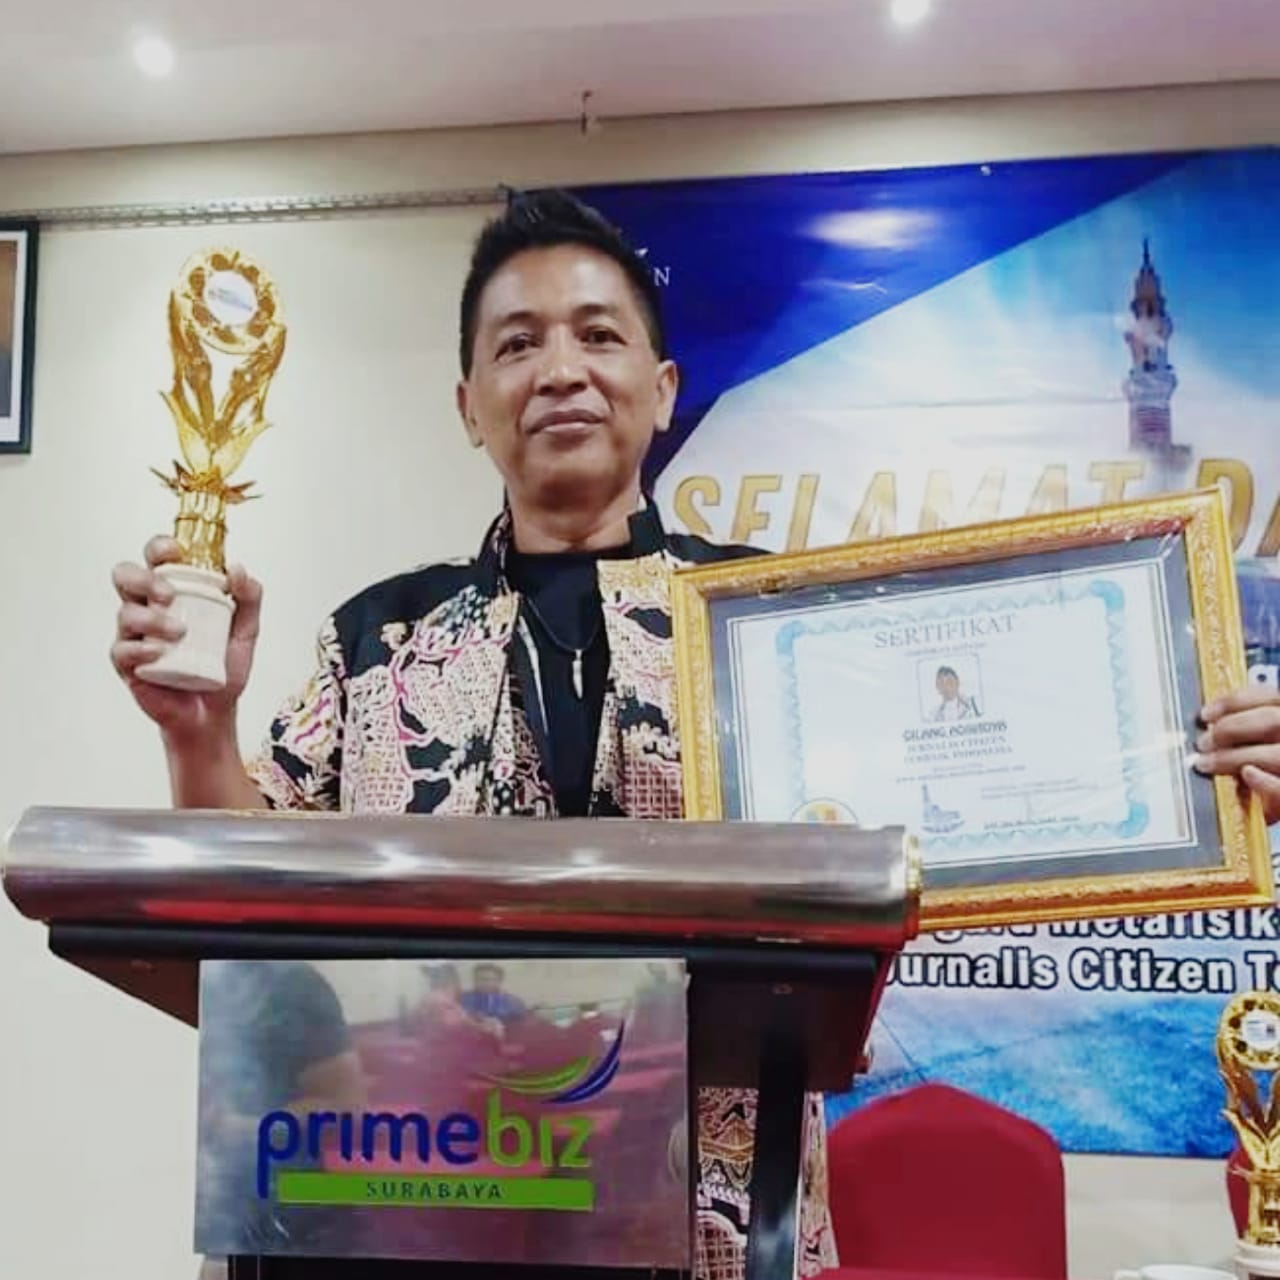 Ilmunya Sering Dipakai Menolong Orang, Gus Umar Efendi Raih Penghargaan Maha Guru Spiritualis Sejati